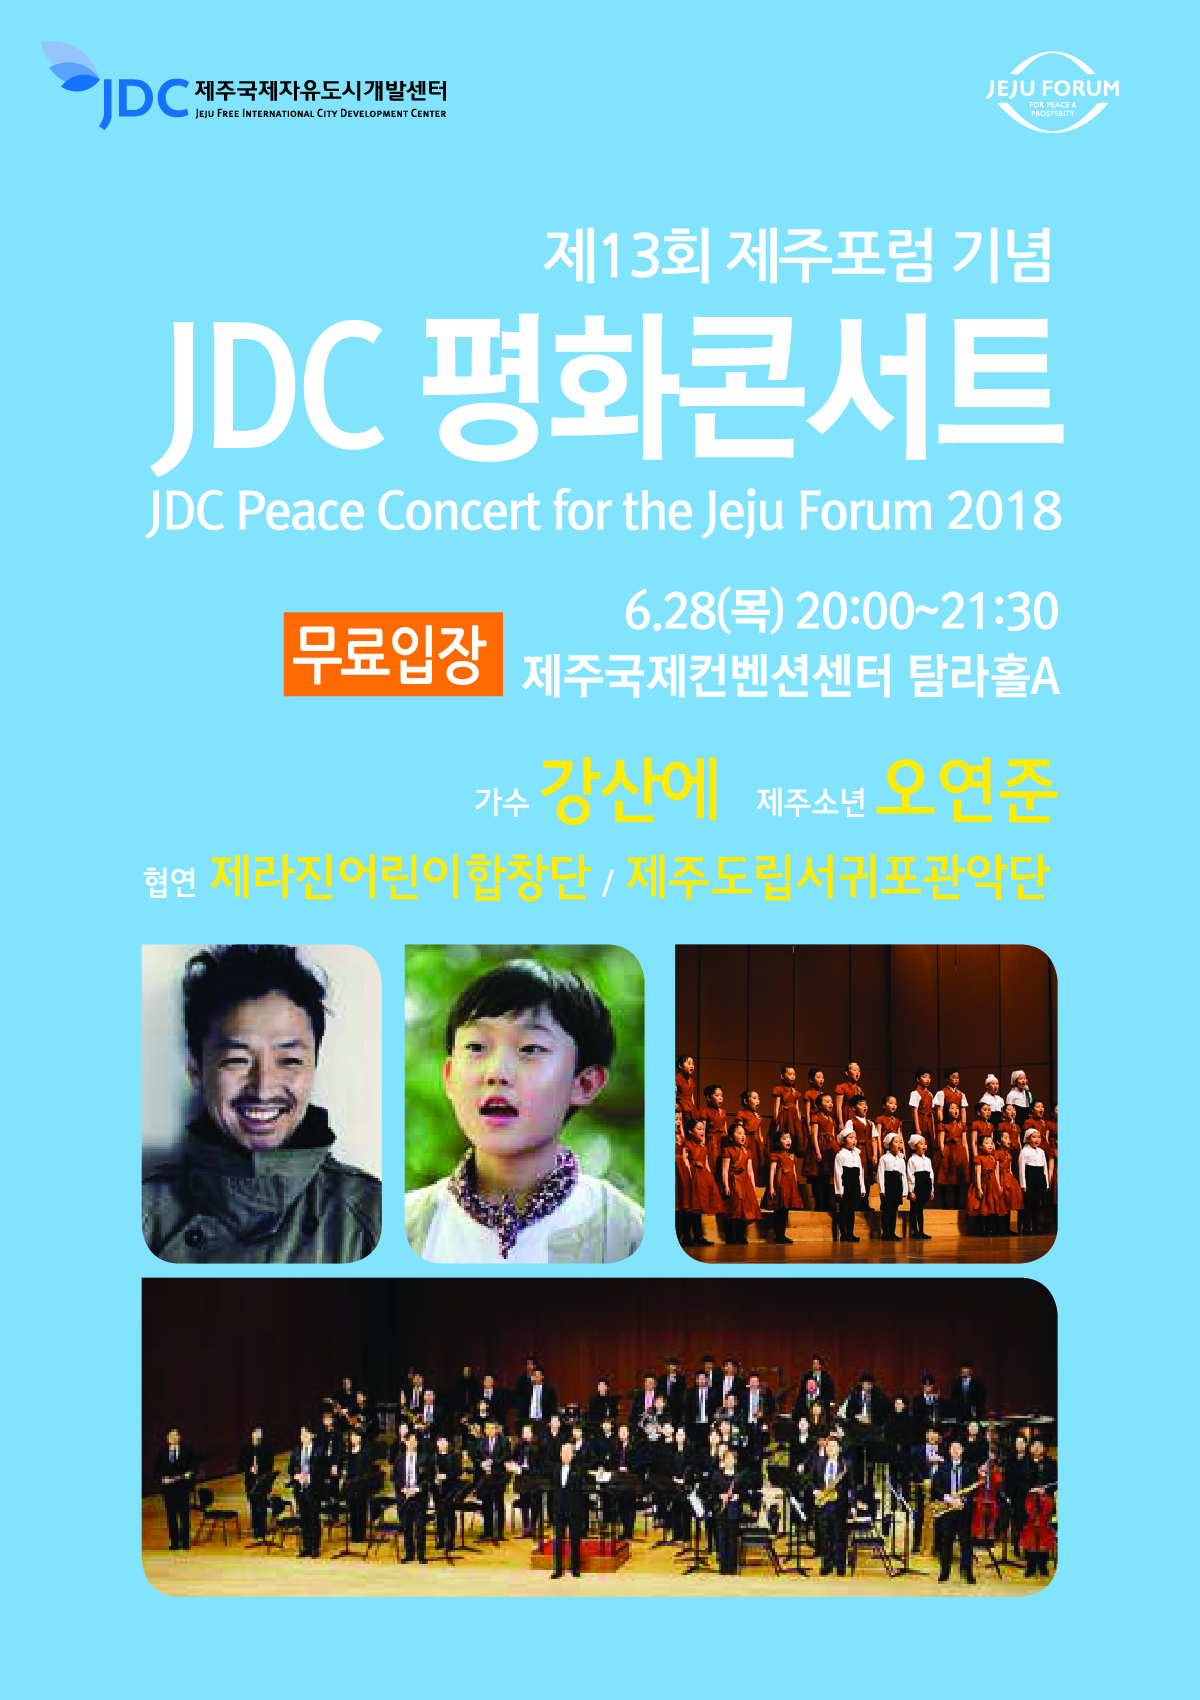 JDC 평화콘서트